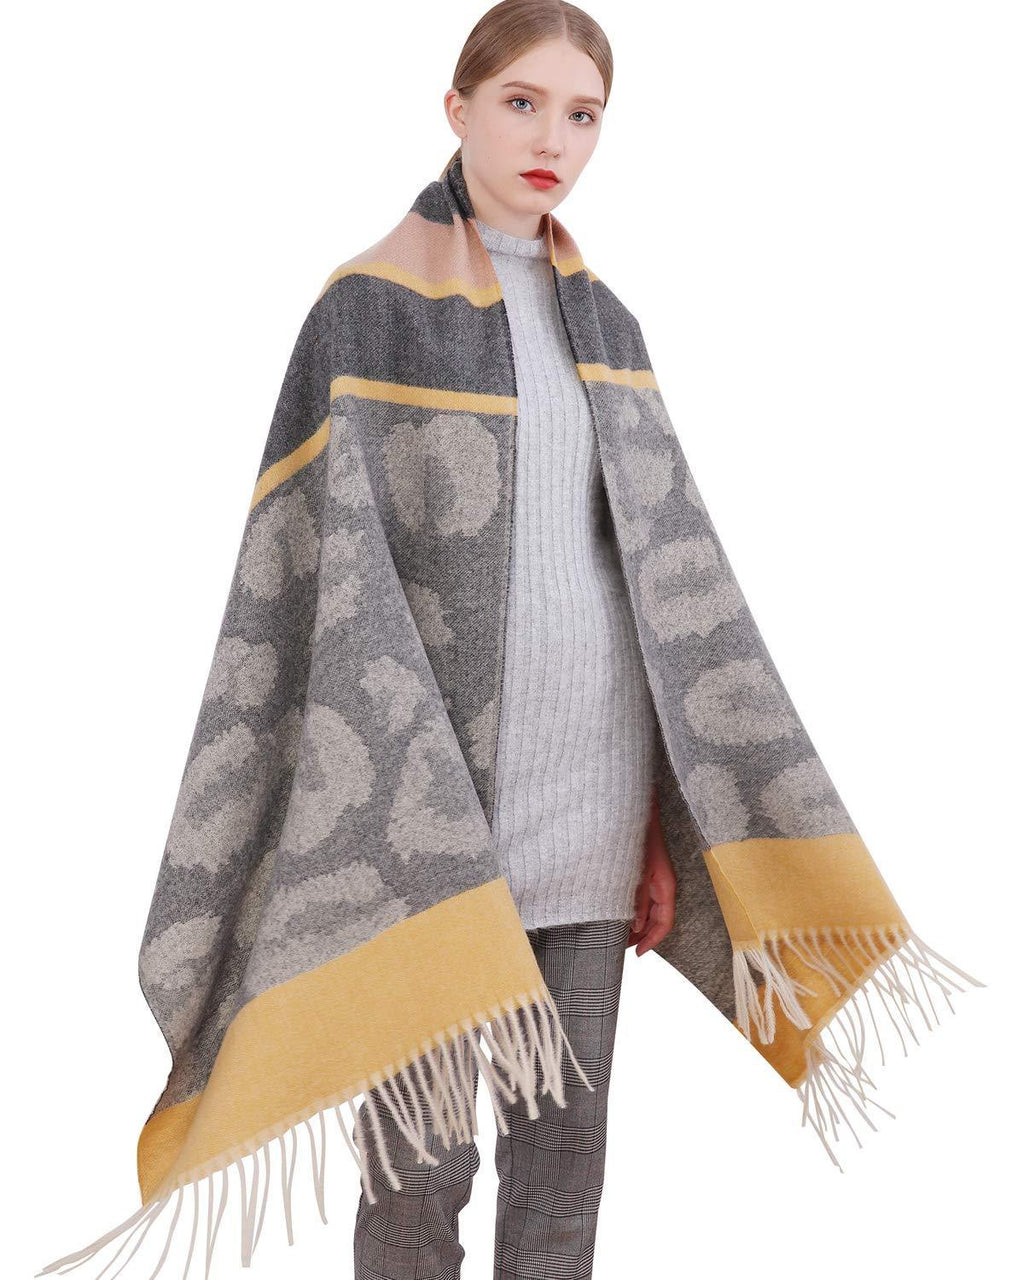 [Australia] - RIIQIICHY Women Scarf Pashmina Shawl Wrap Stole Winter Warm Thick Blanket Oversized Scarves with Tassel Yellow 